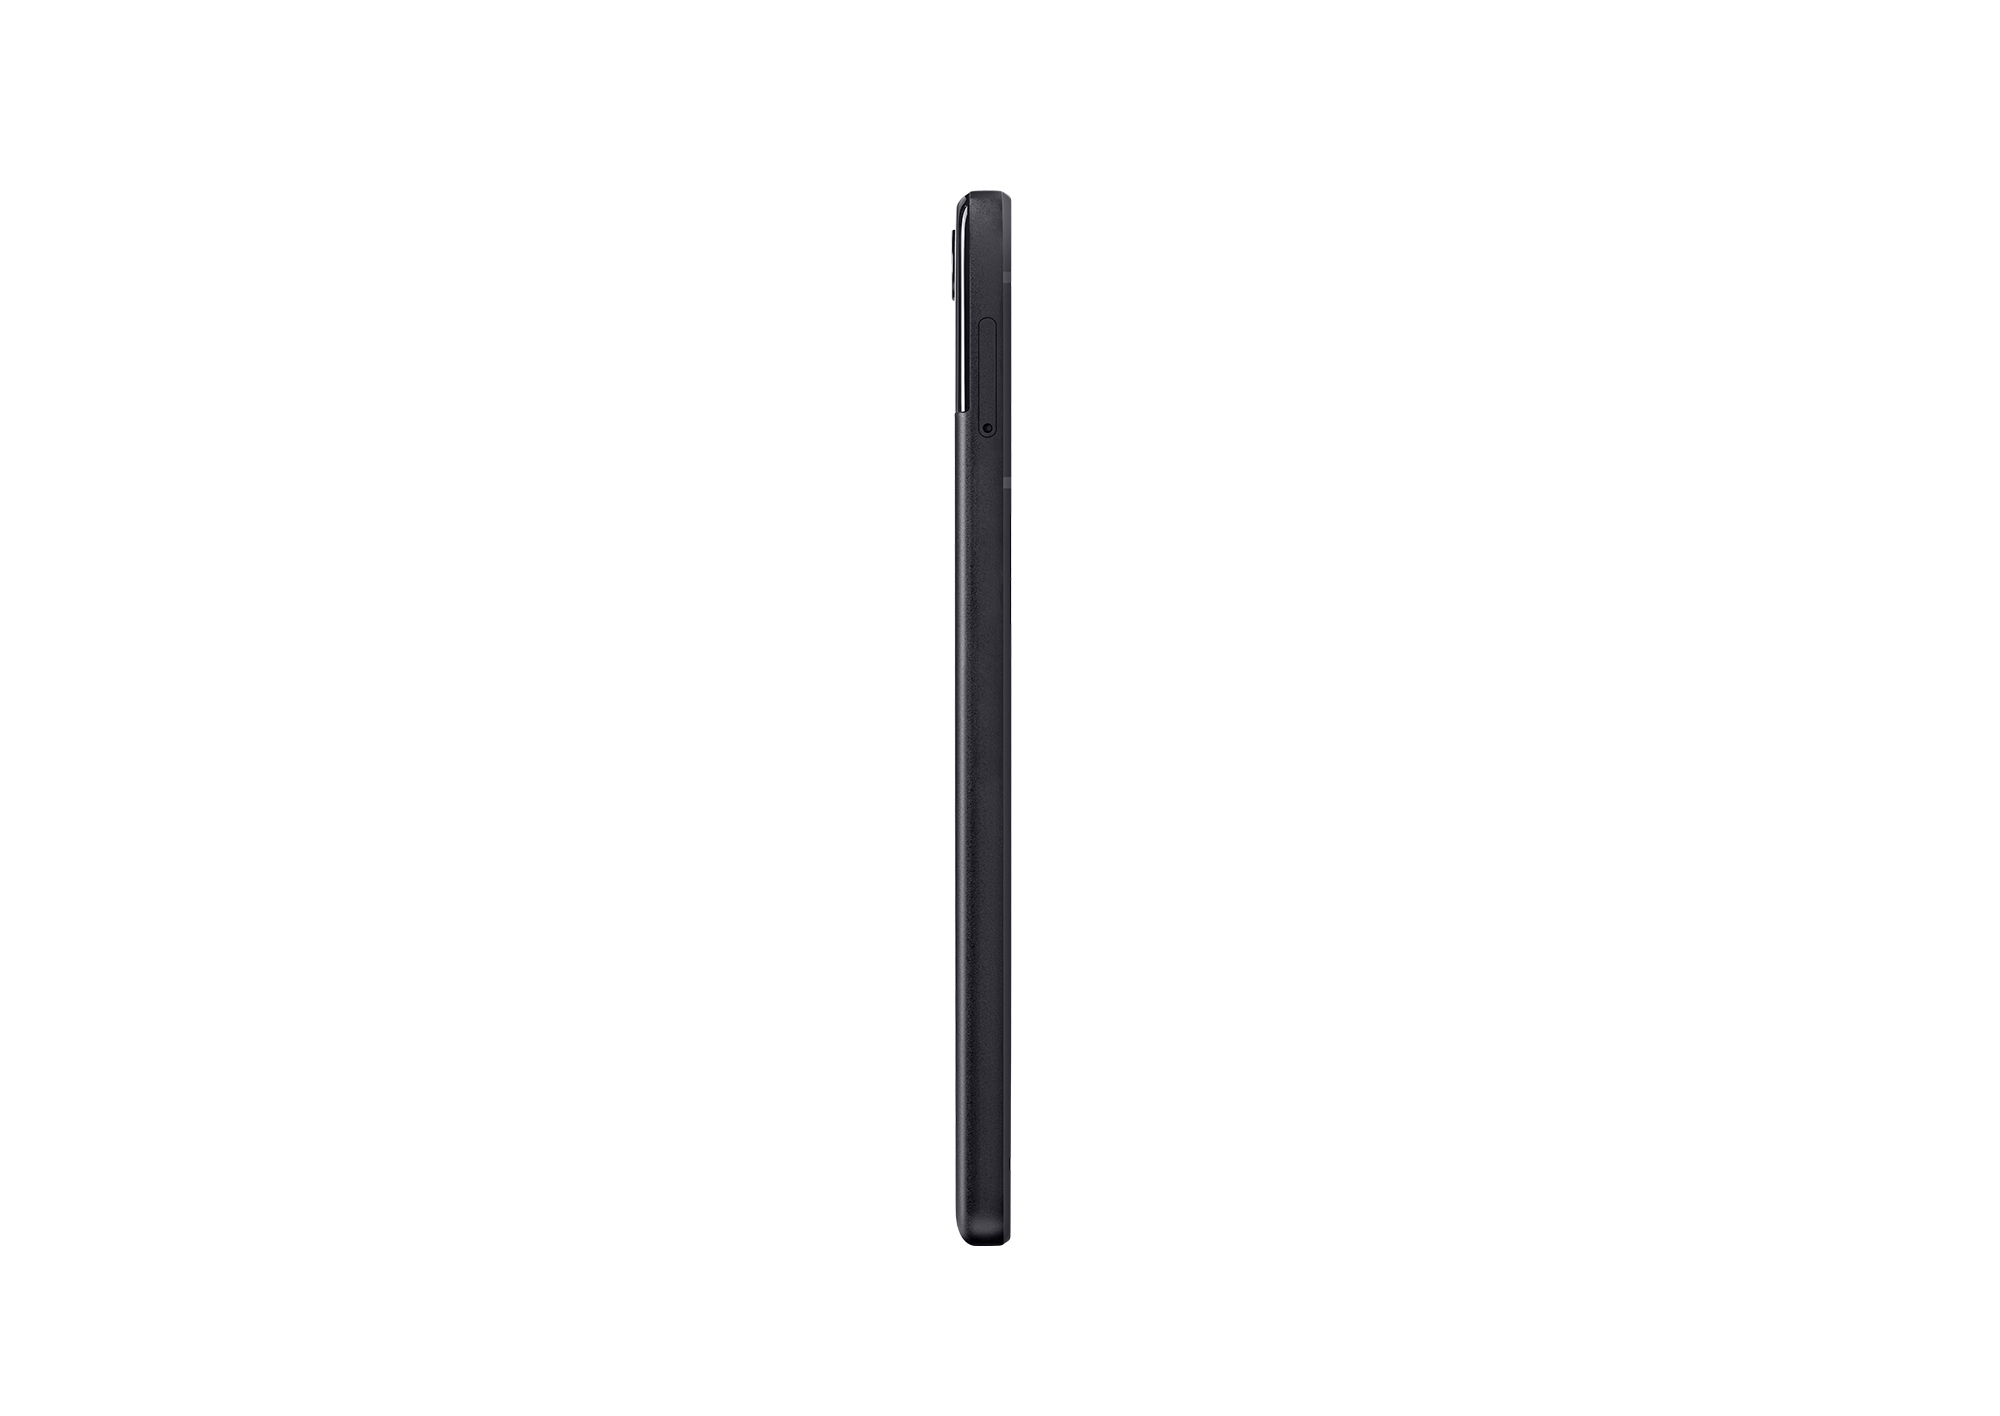 Google Pixel 2 64GB Verizon Smartphone, Black - image 4 of 7